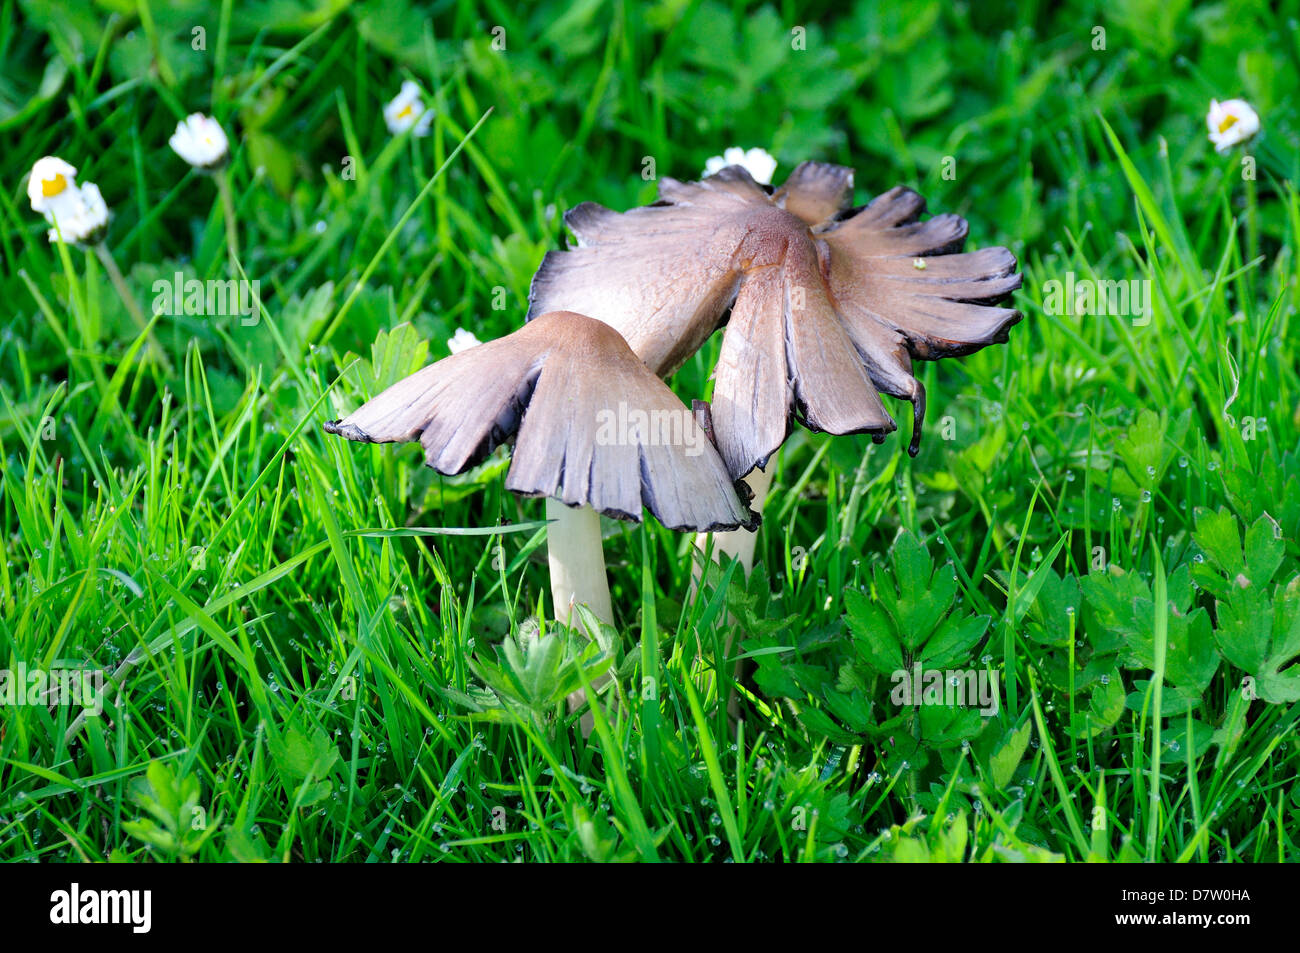 Common Inkcap Mushroom (Coprinus atramentarius) on garden lawn. Kent, England. May 12 2013. Stock Photo